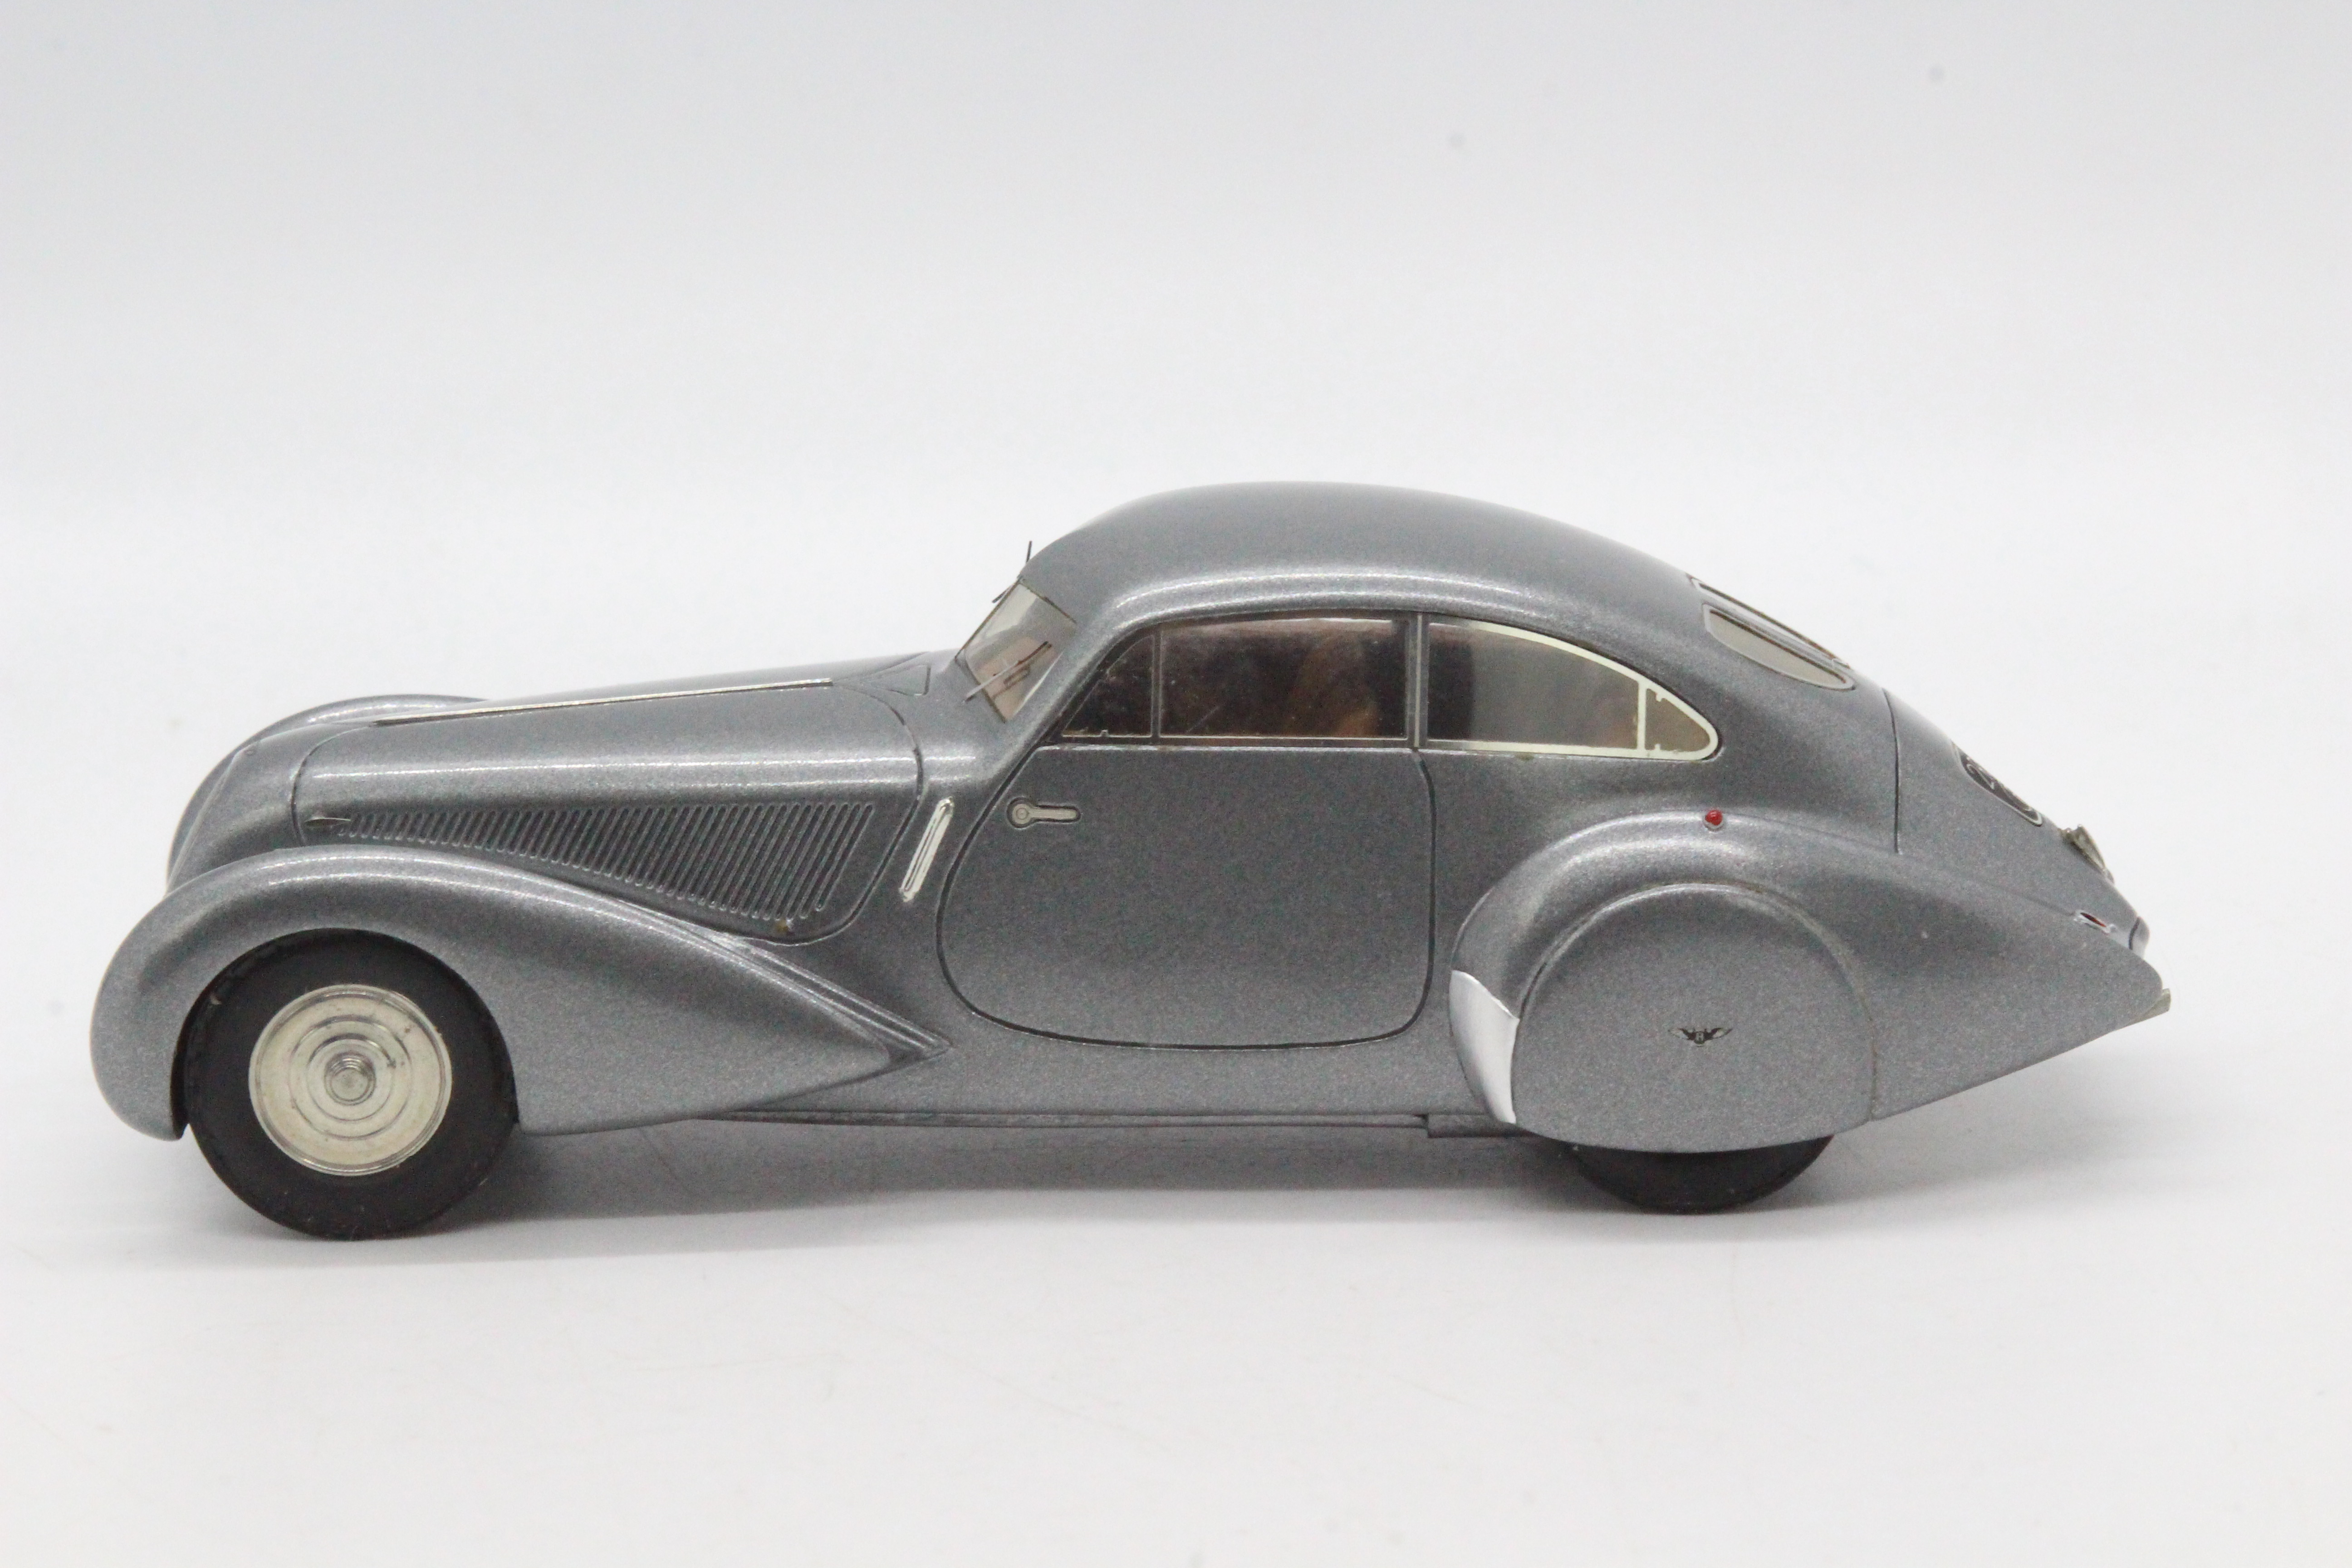 MPH Models, Tim Dyke - A boxed MPH Models #956 Bentley 'Embiricos' 1938 Road Car. - Image 2 of 9